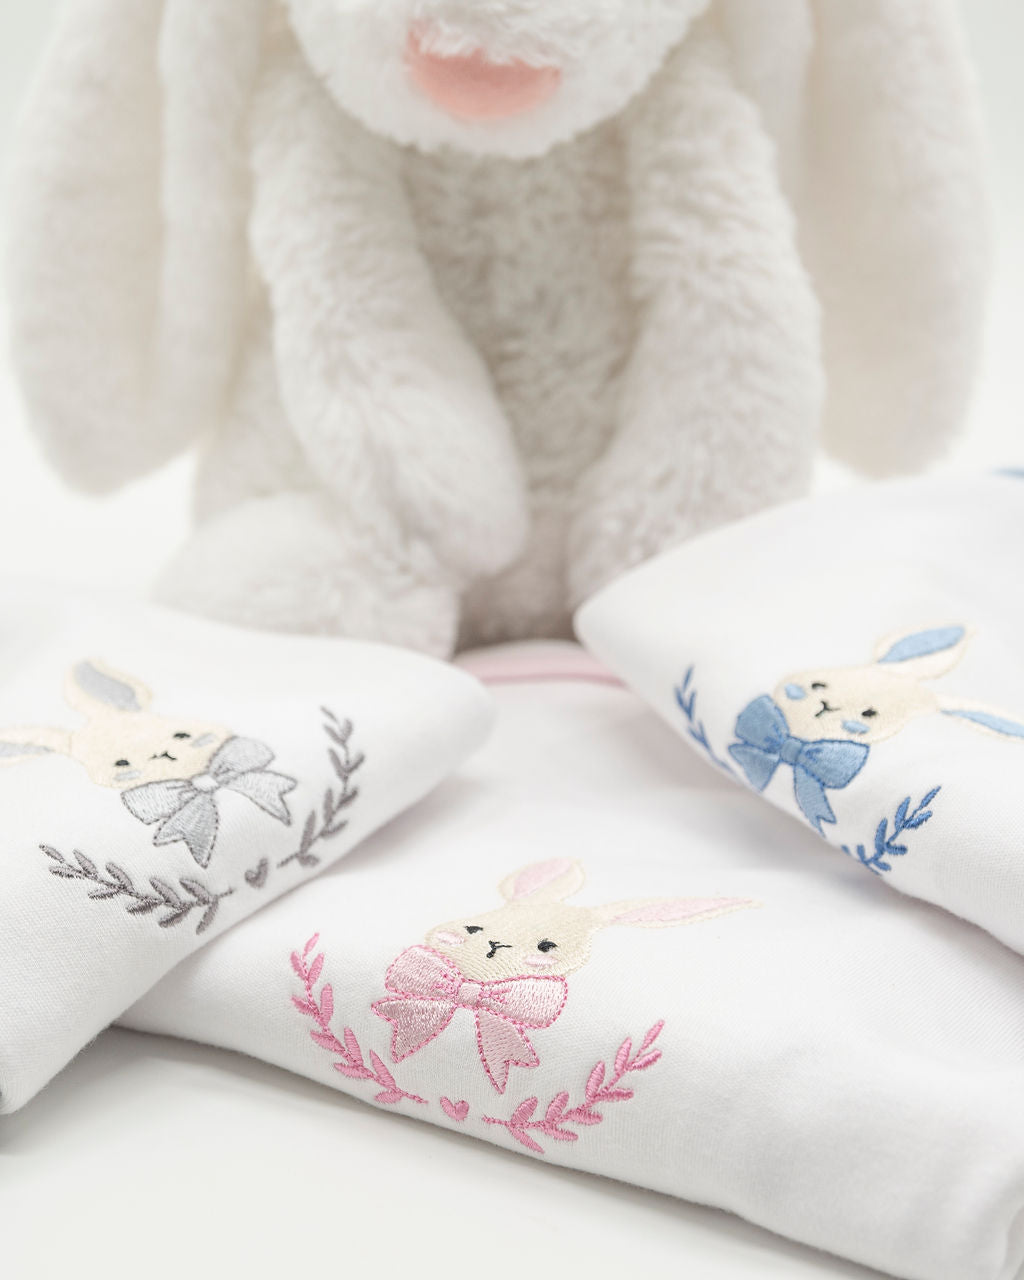 Embroidered Bunny Babygro